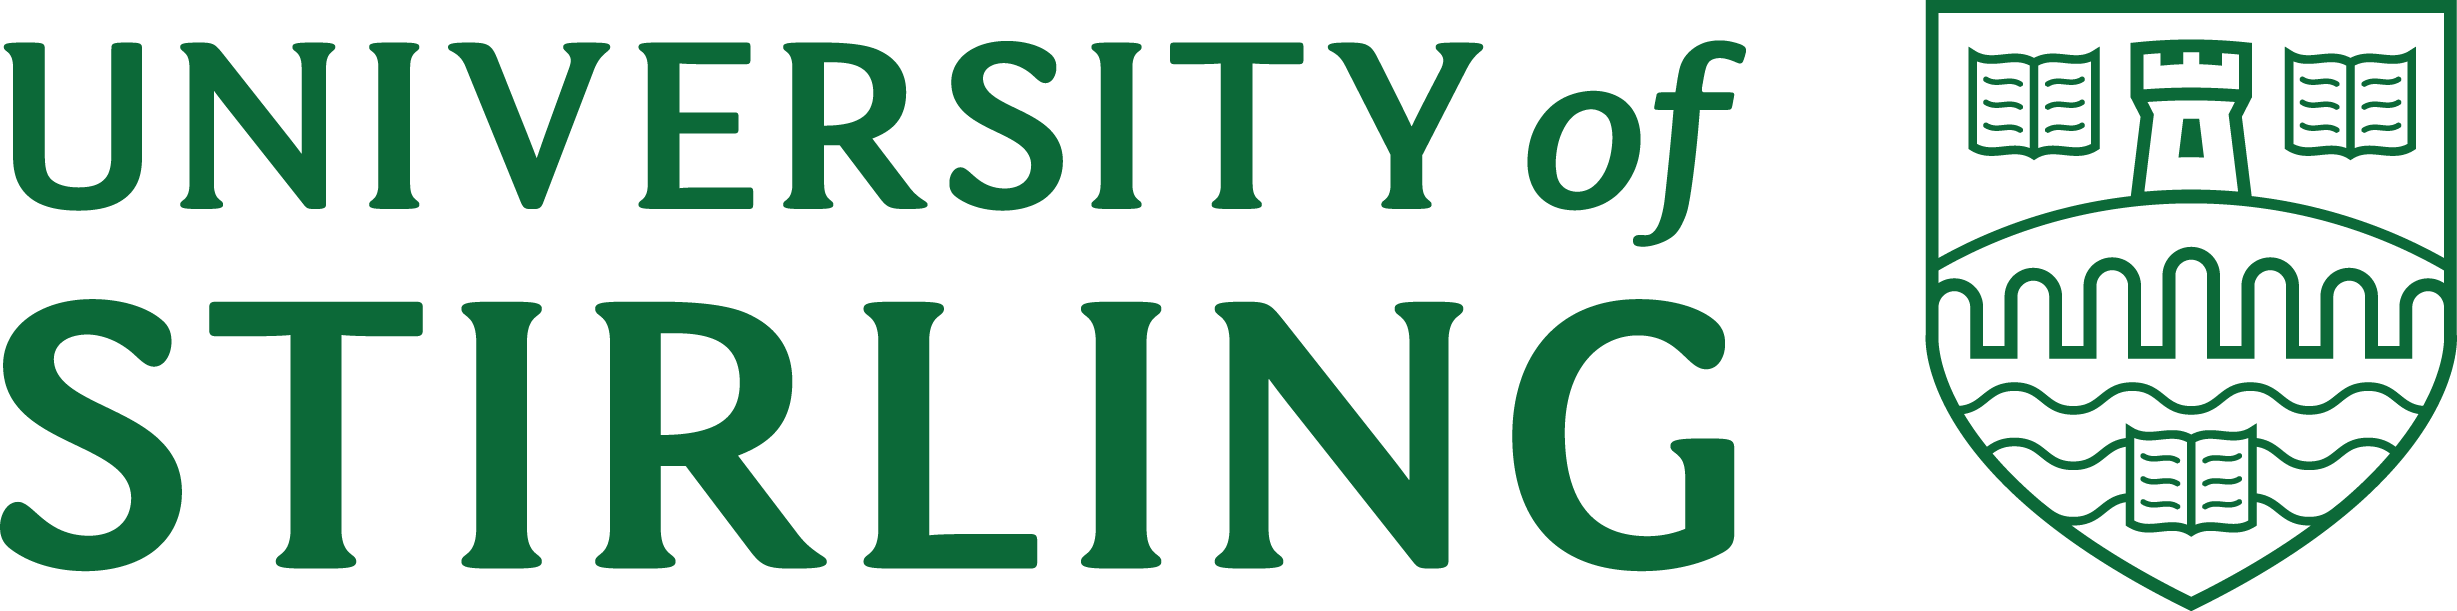 Stirling University Business and Enterprise